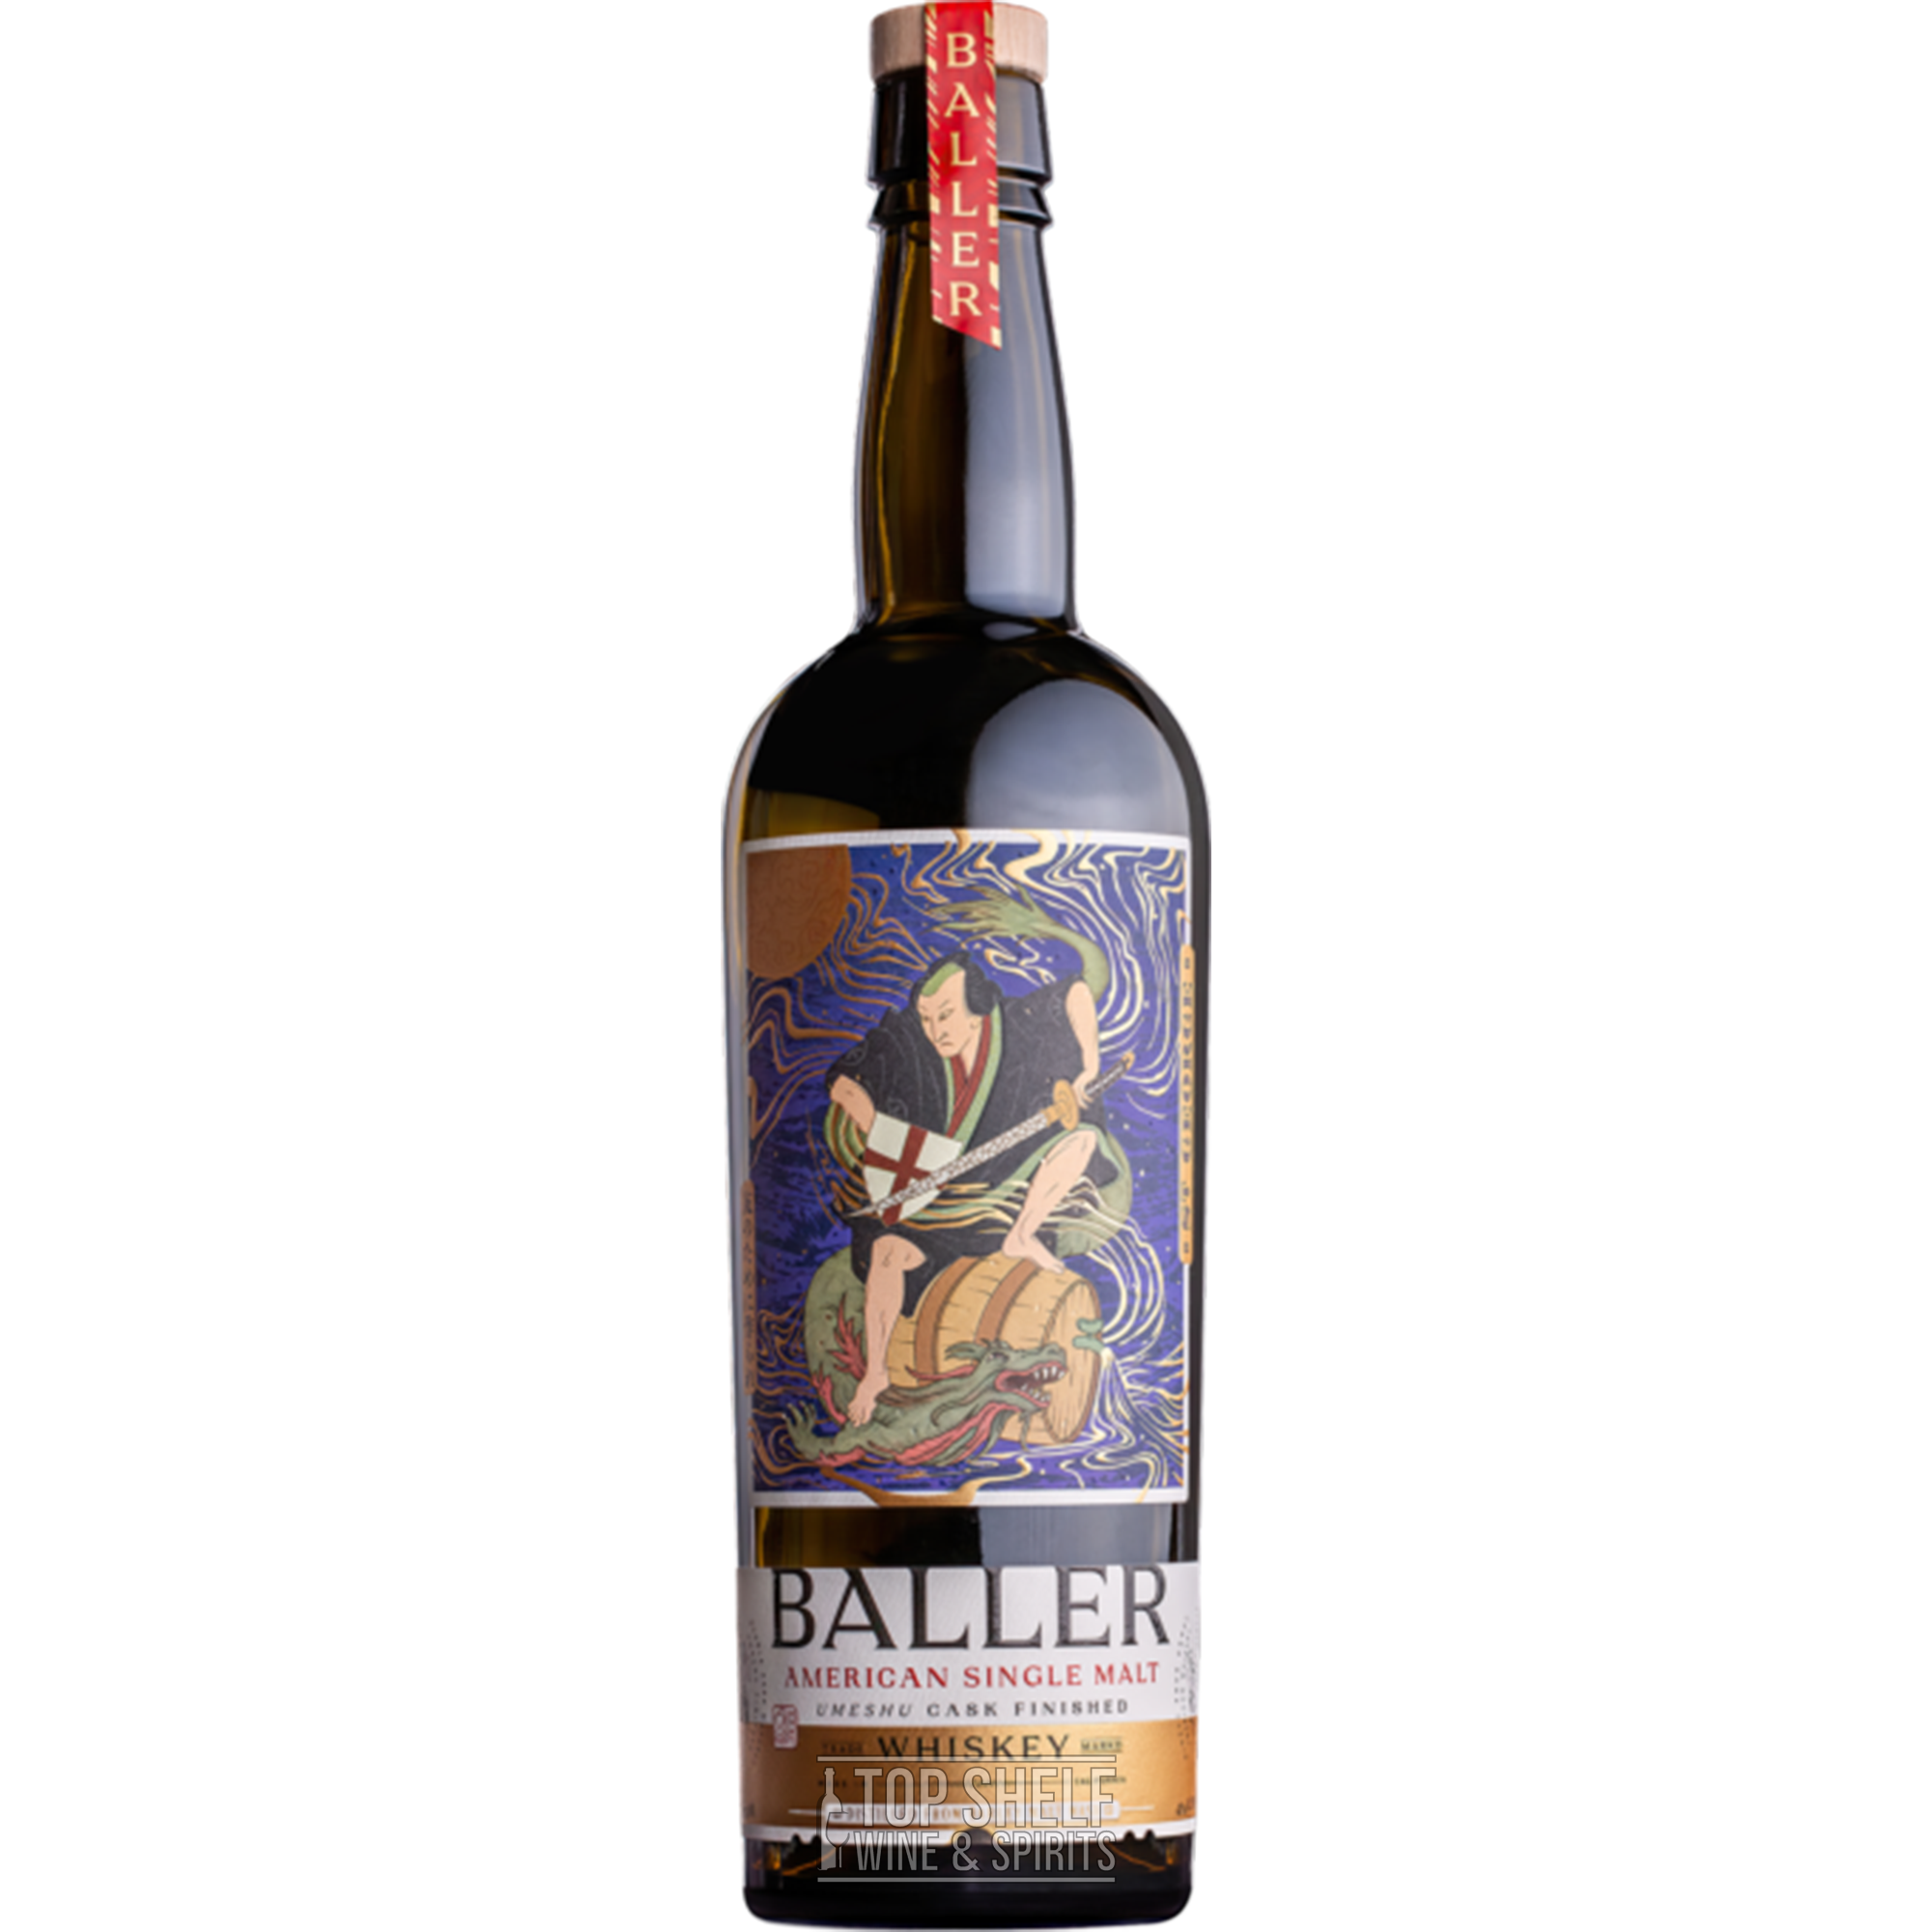 St. George Baller American Single Malt Whiskey